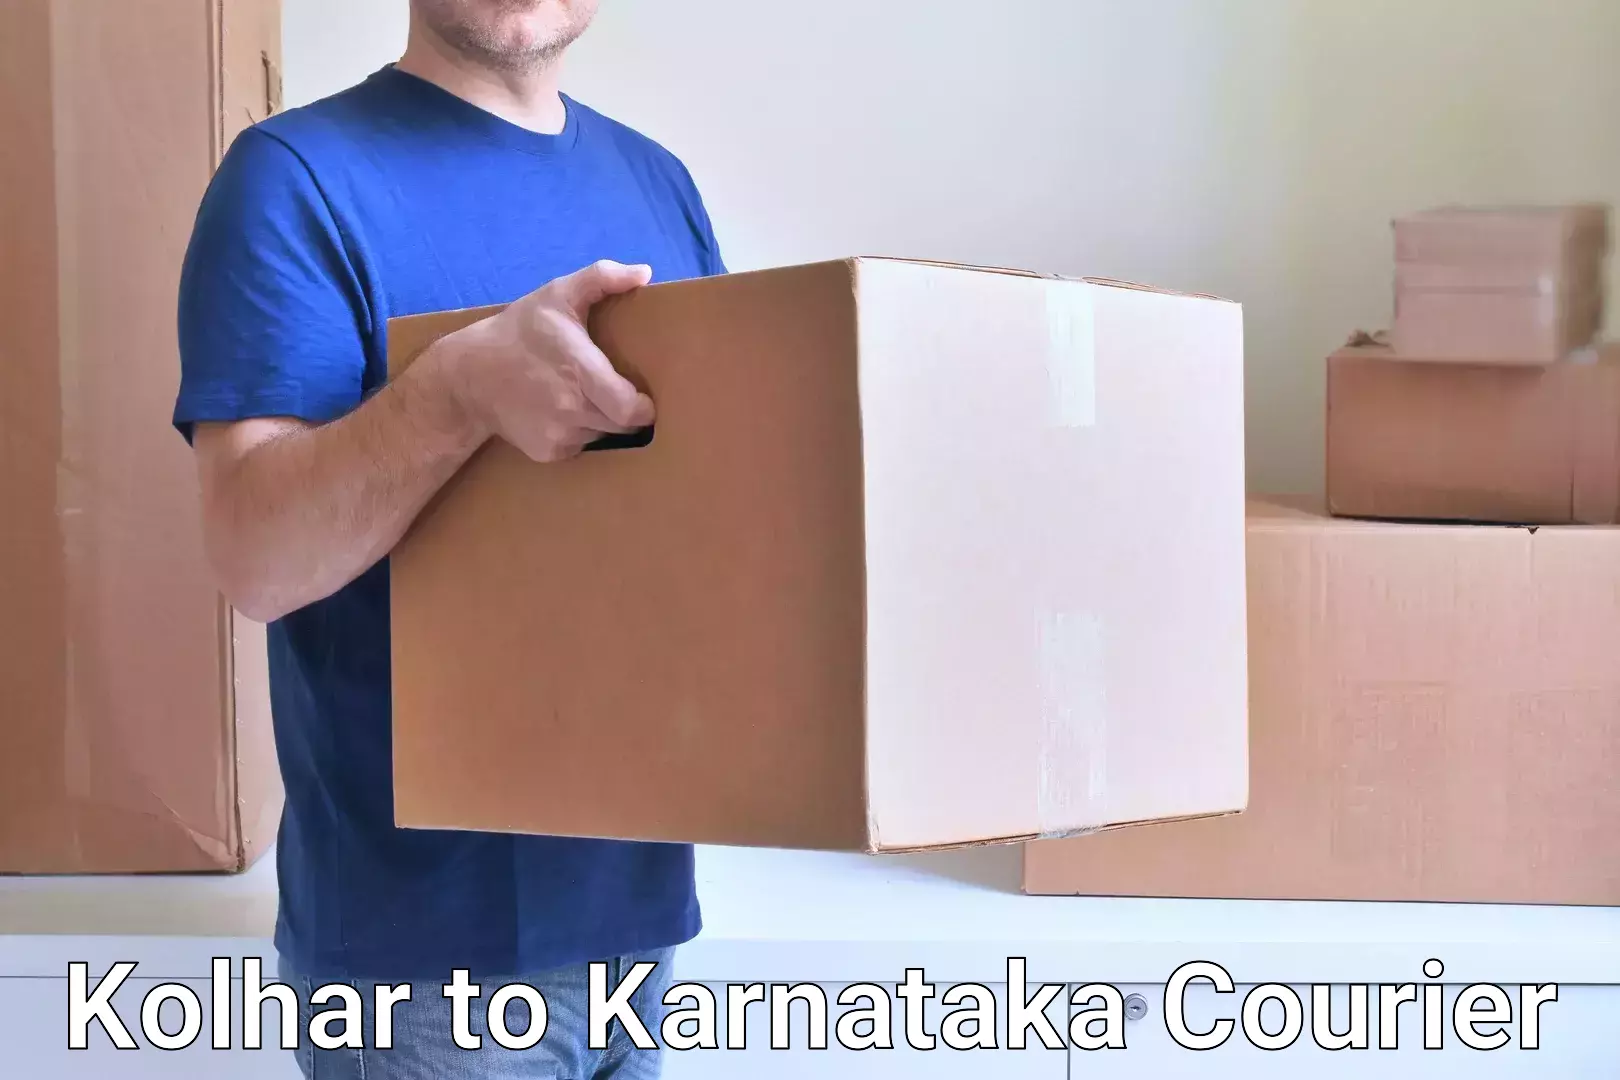 Courier service innovation Kolhar to Chintamani Kolar